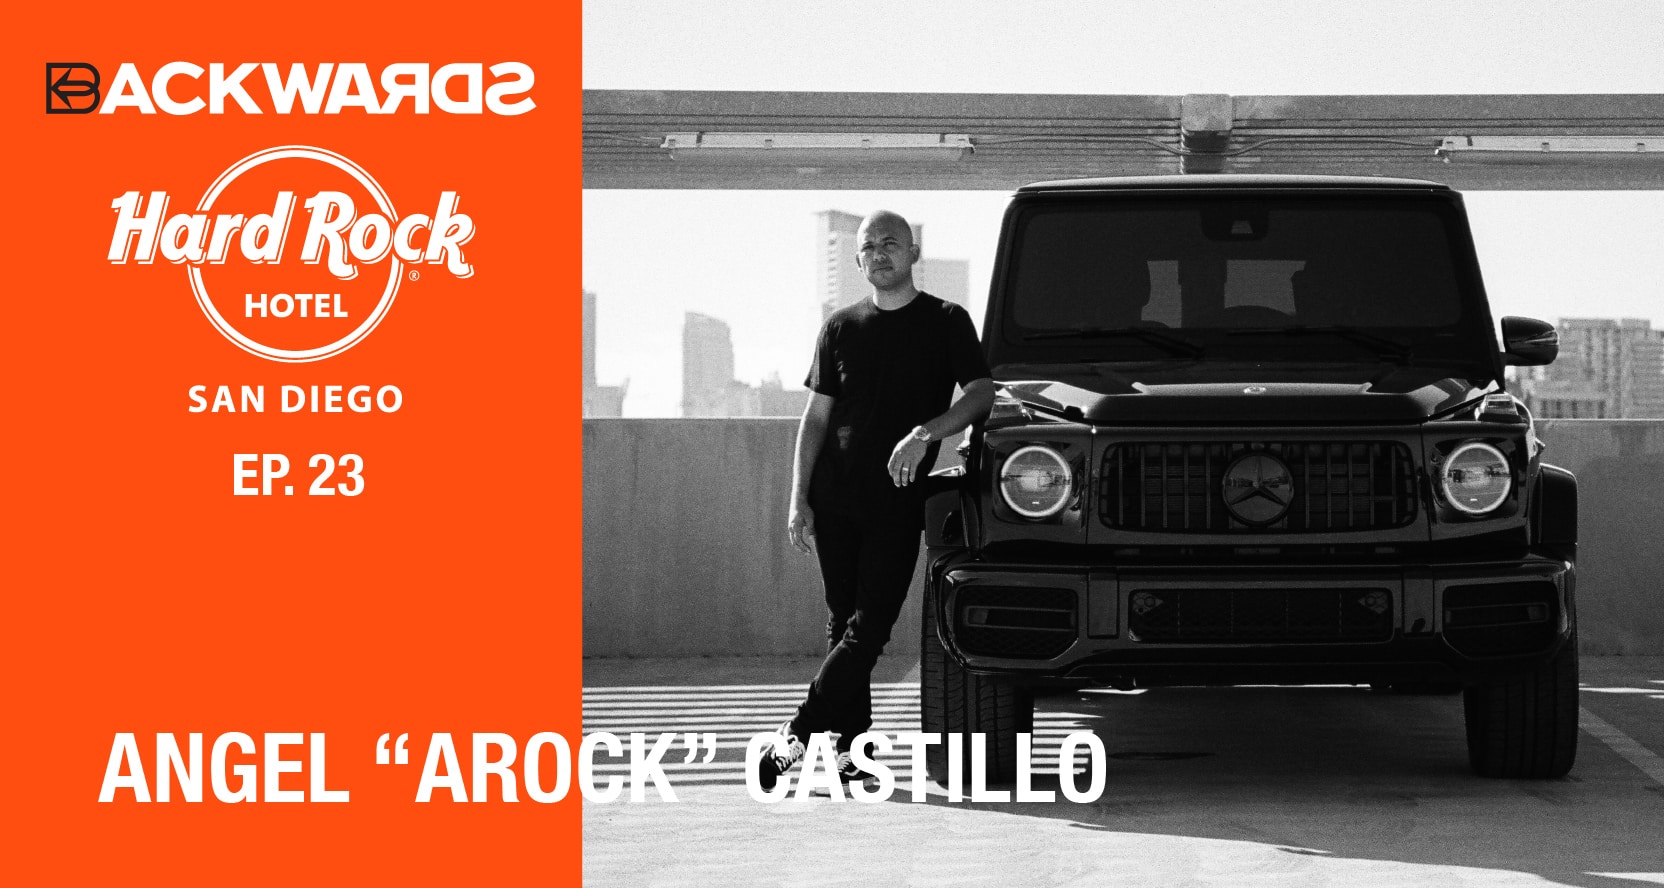 Bringin’ it Backwards: Interview with Angel “AROCK” Castillo